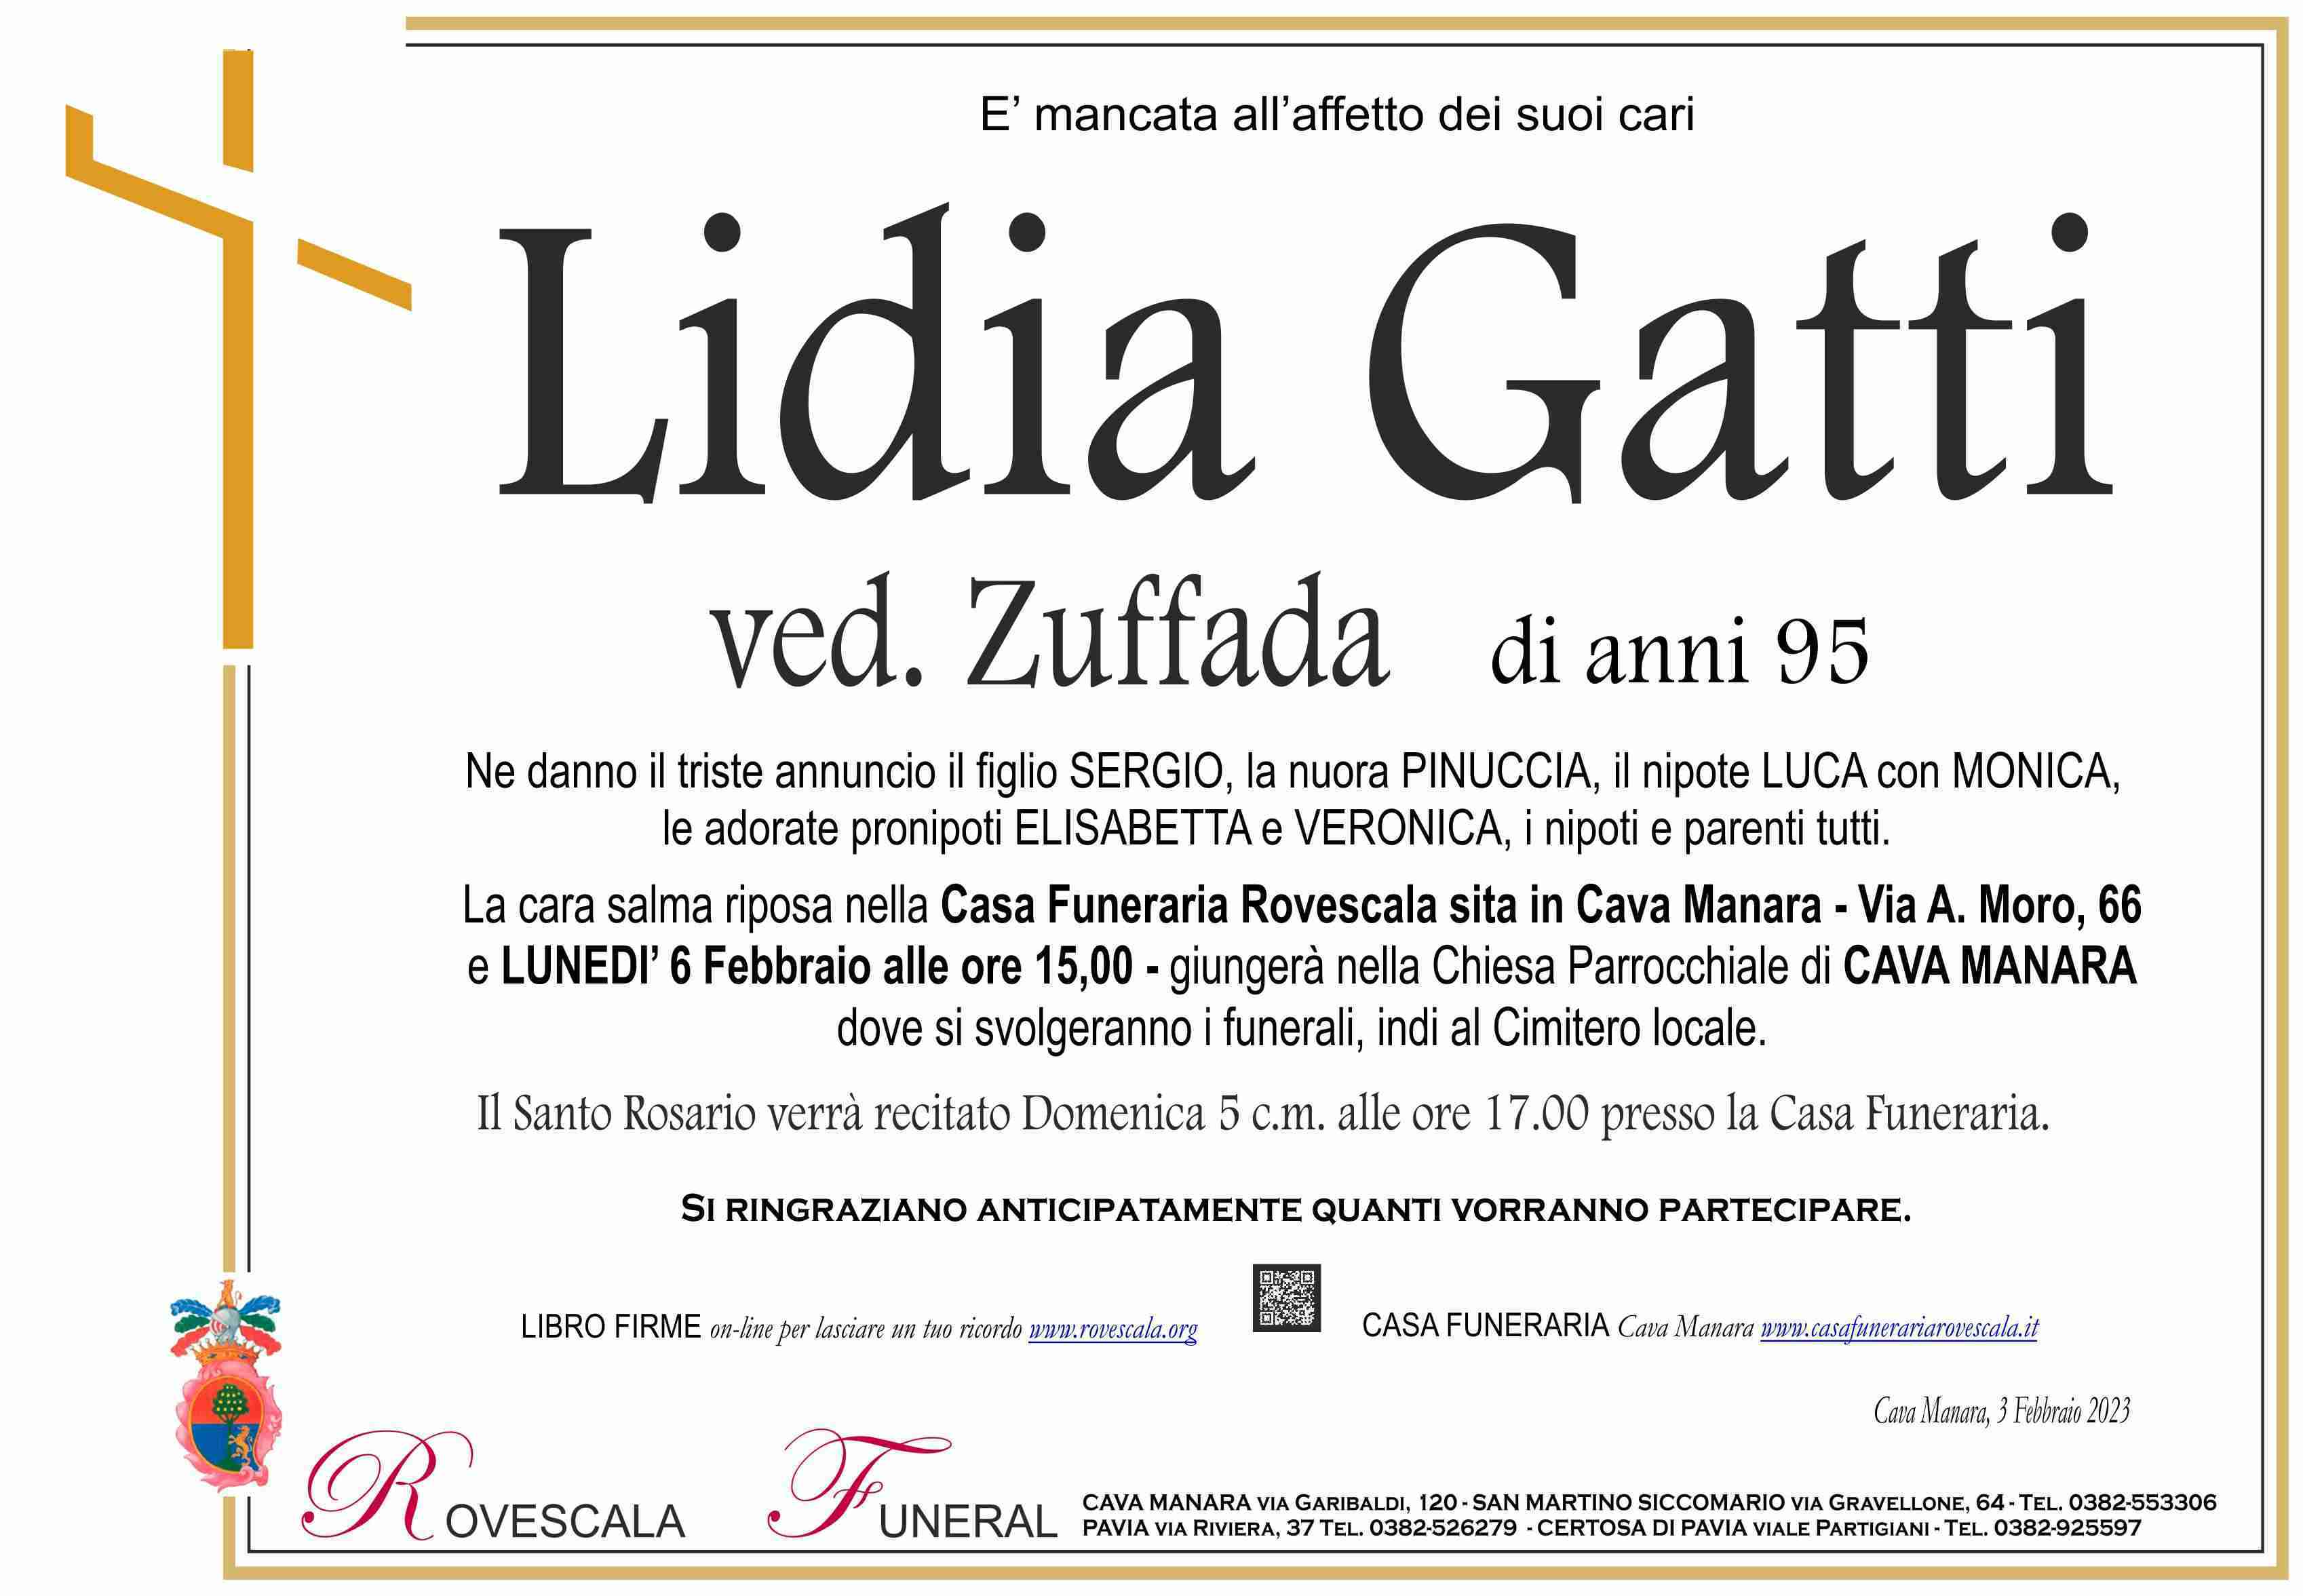 Lidia Gatti